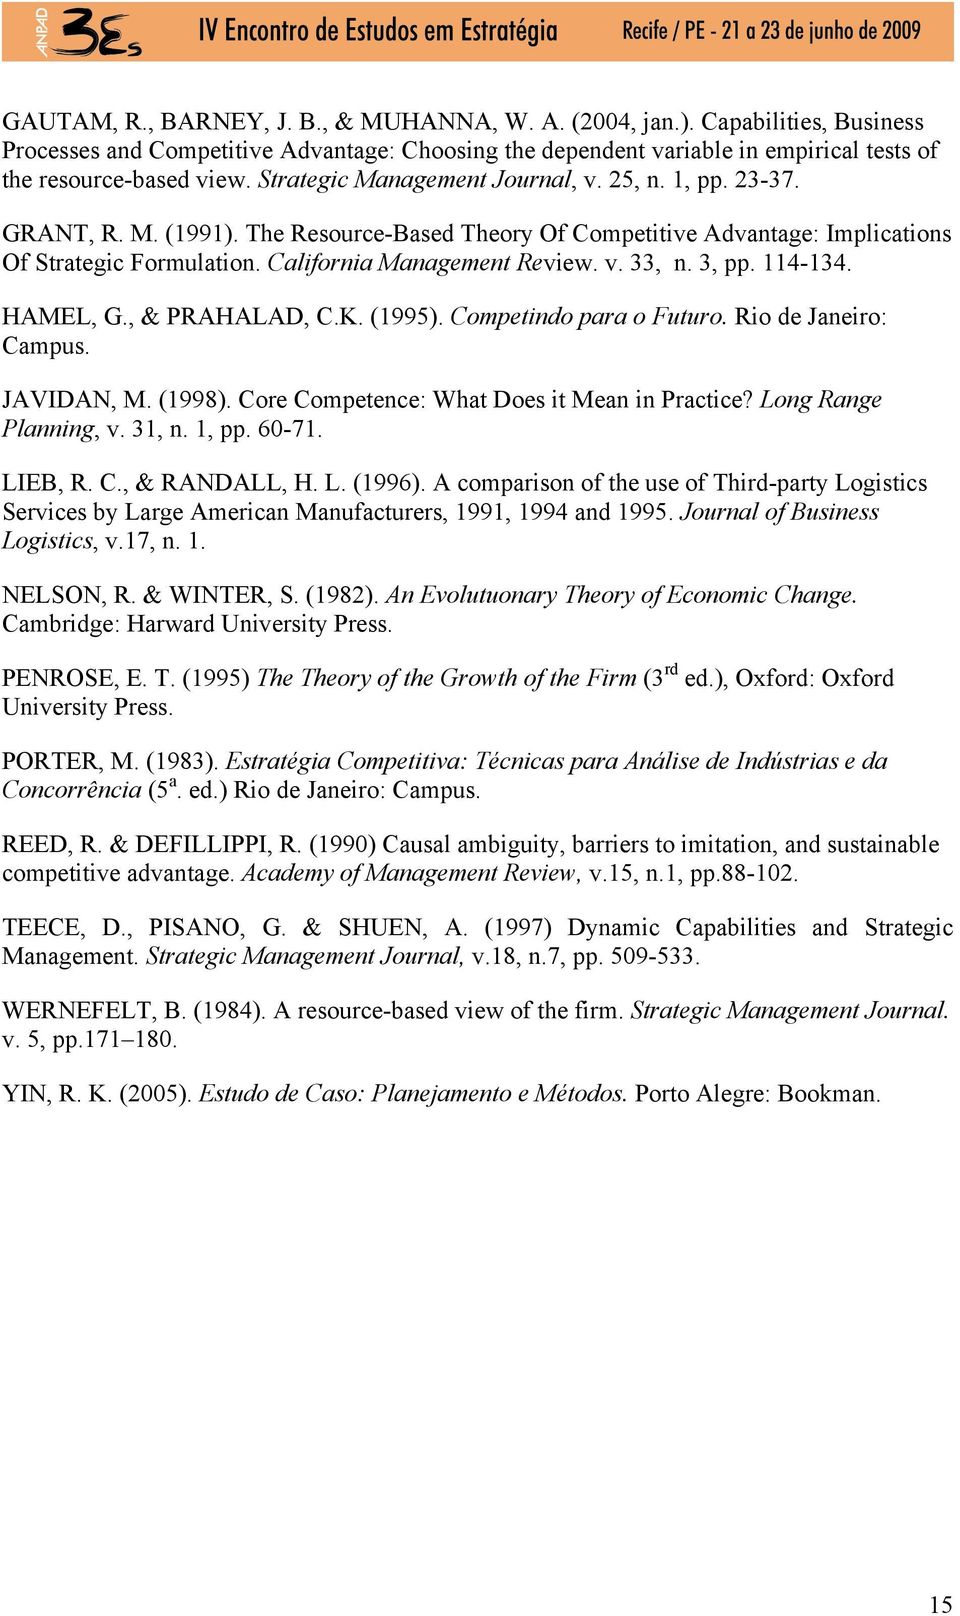 3, pp. 114-134. HAMEL, G., & PRAHALAD, C.K. (1995). Competindo para o Futuro. Rio de Janeiro: Campus. JAVIDAN, M. (1998). Core Competence: What Does it Mean in Practice? Long Range Planning, v. 31, n.